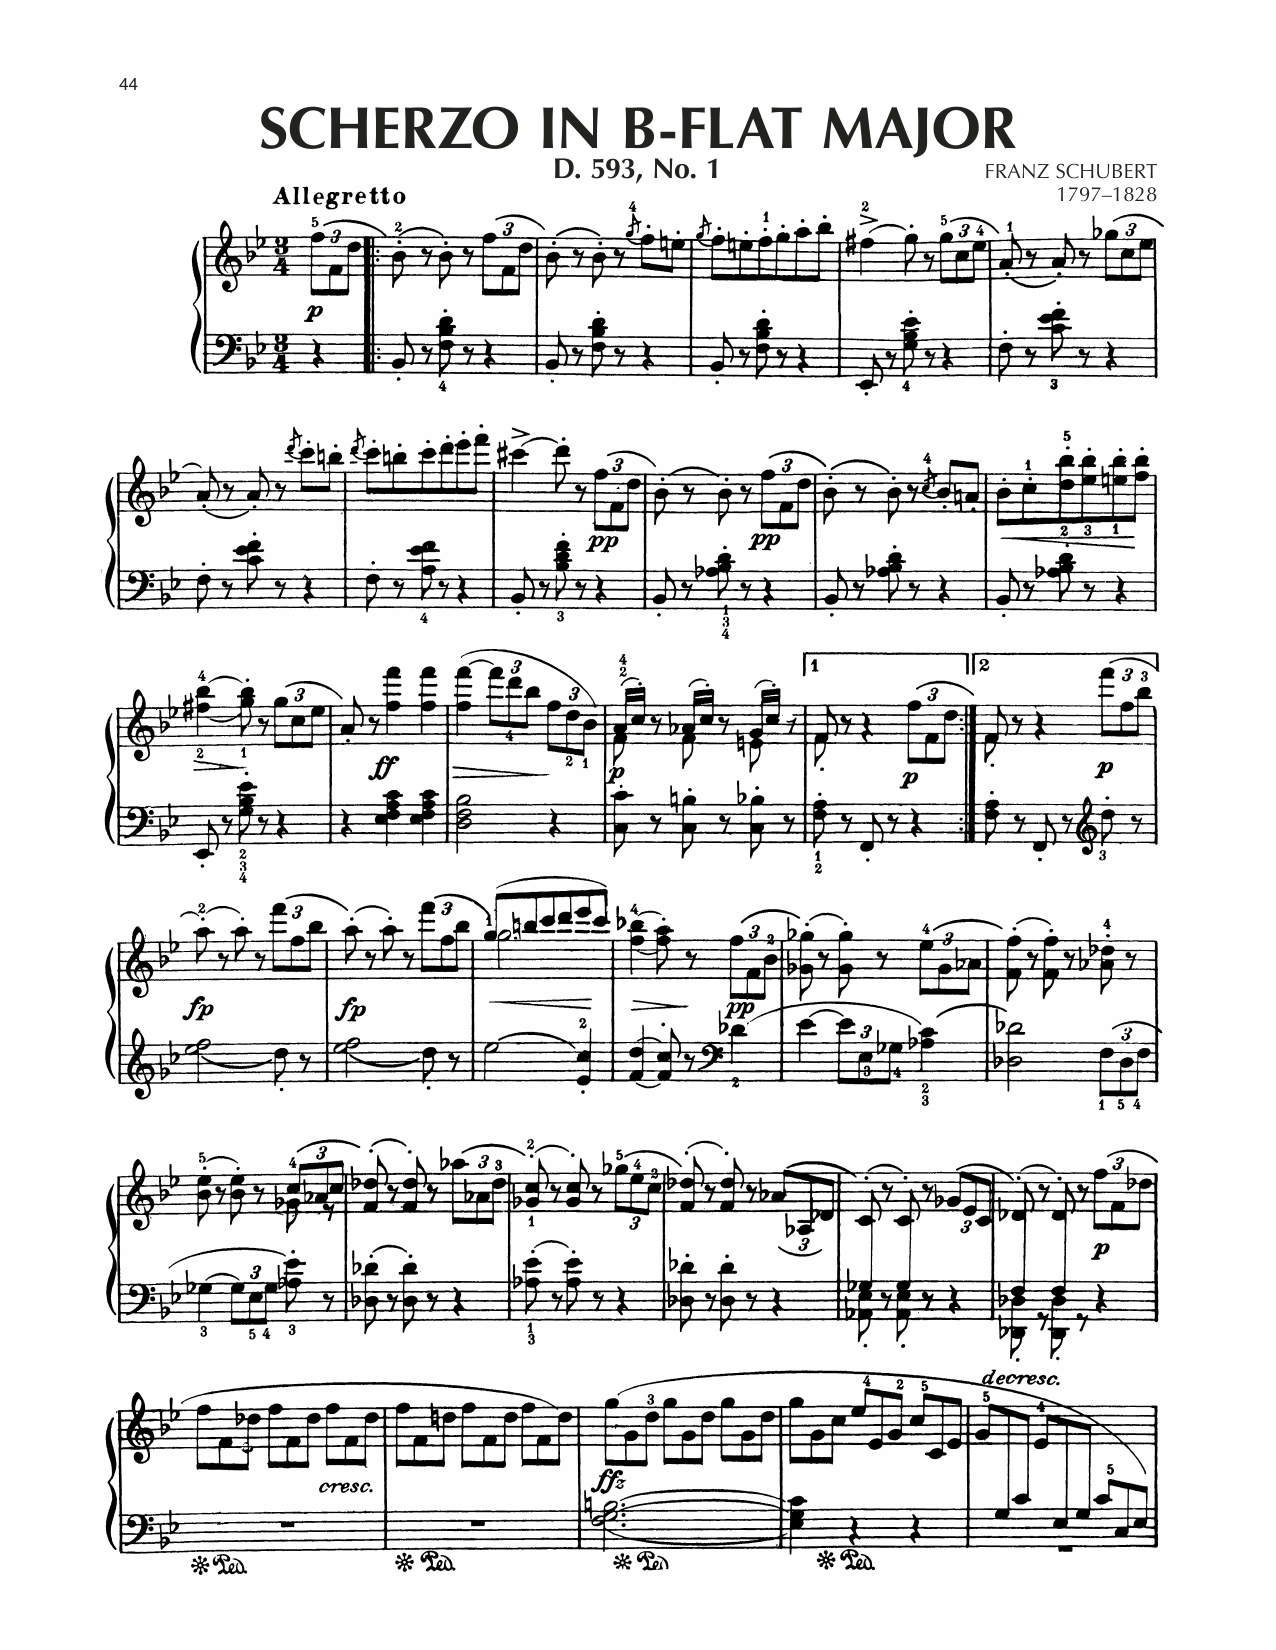 Franz Schubert Scherzo In B-Flat Major, D. 593, No. 1 Sheet Music Notes & Chords for Piano Solo - Download or Print PDF